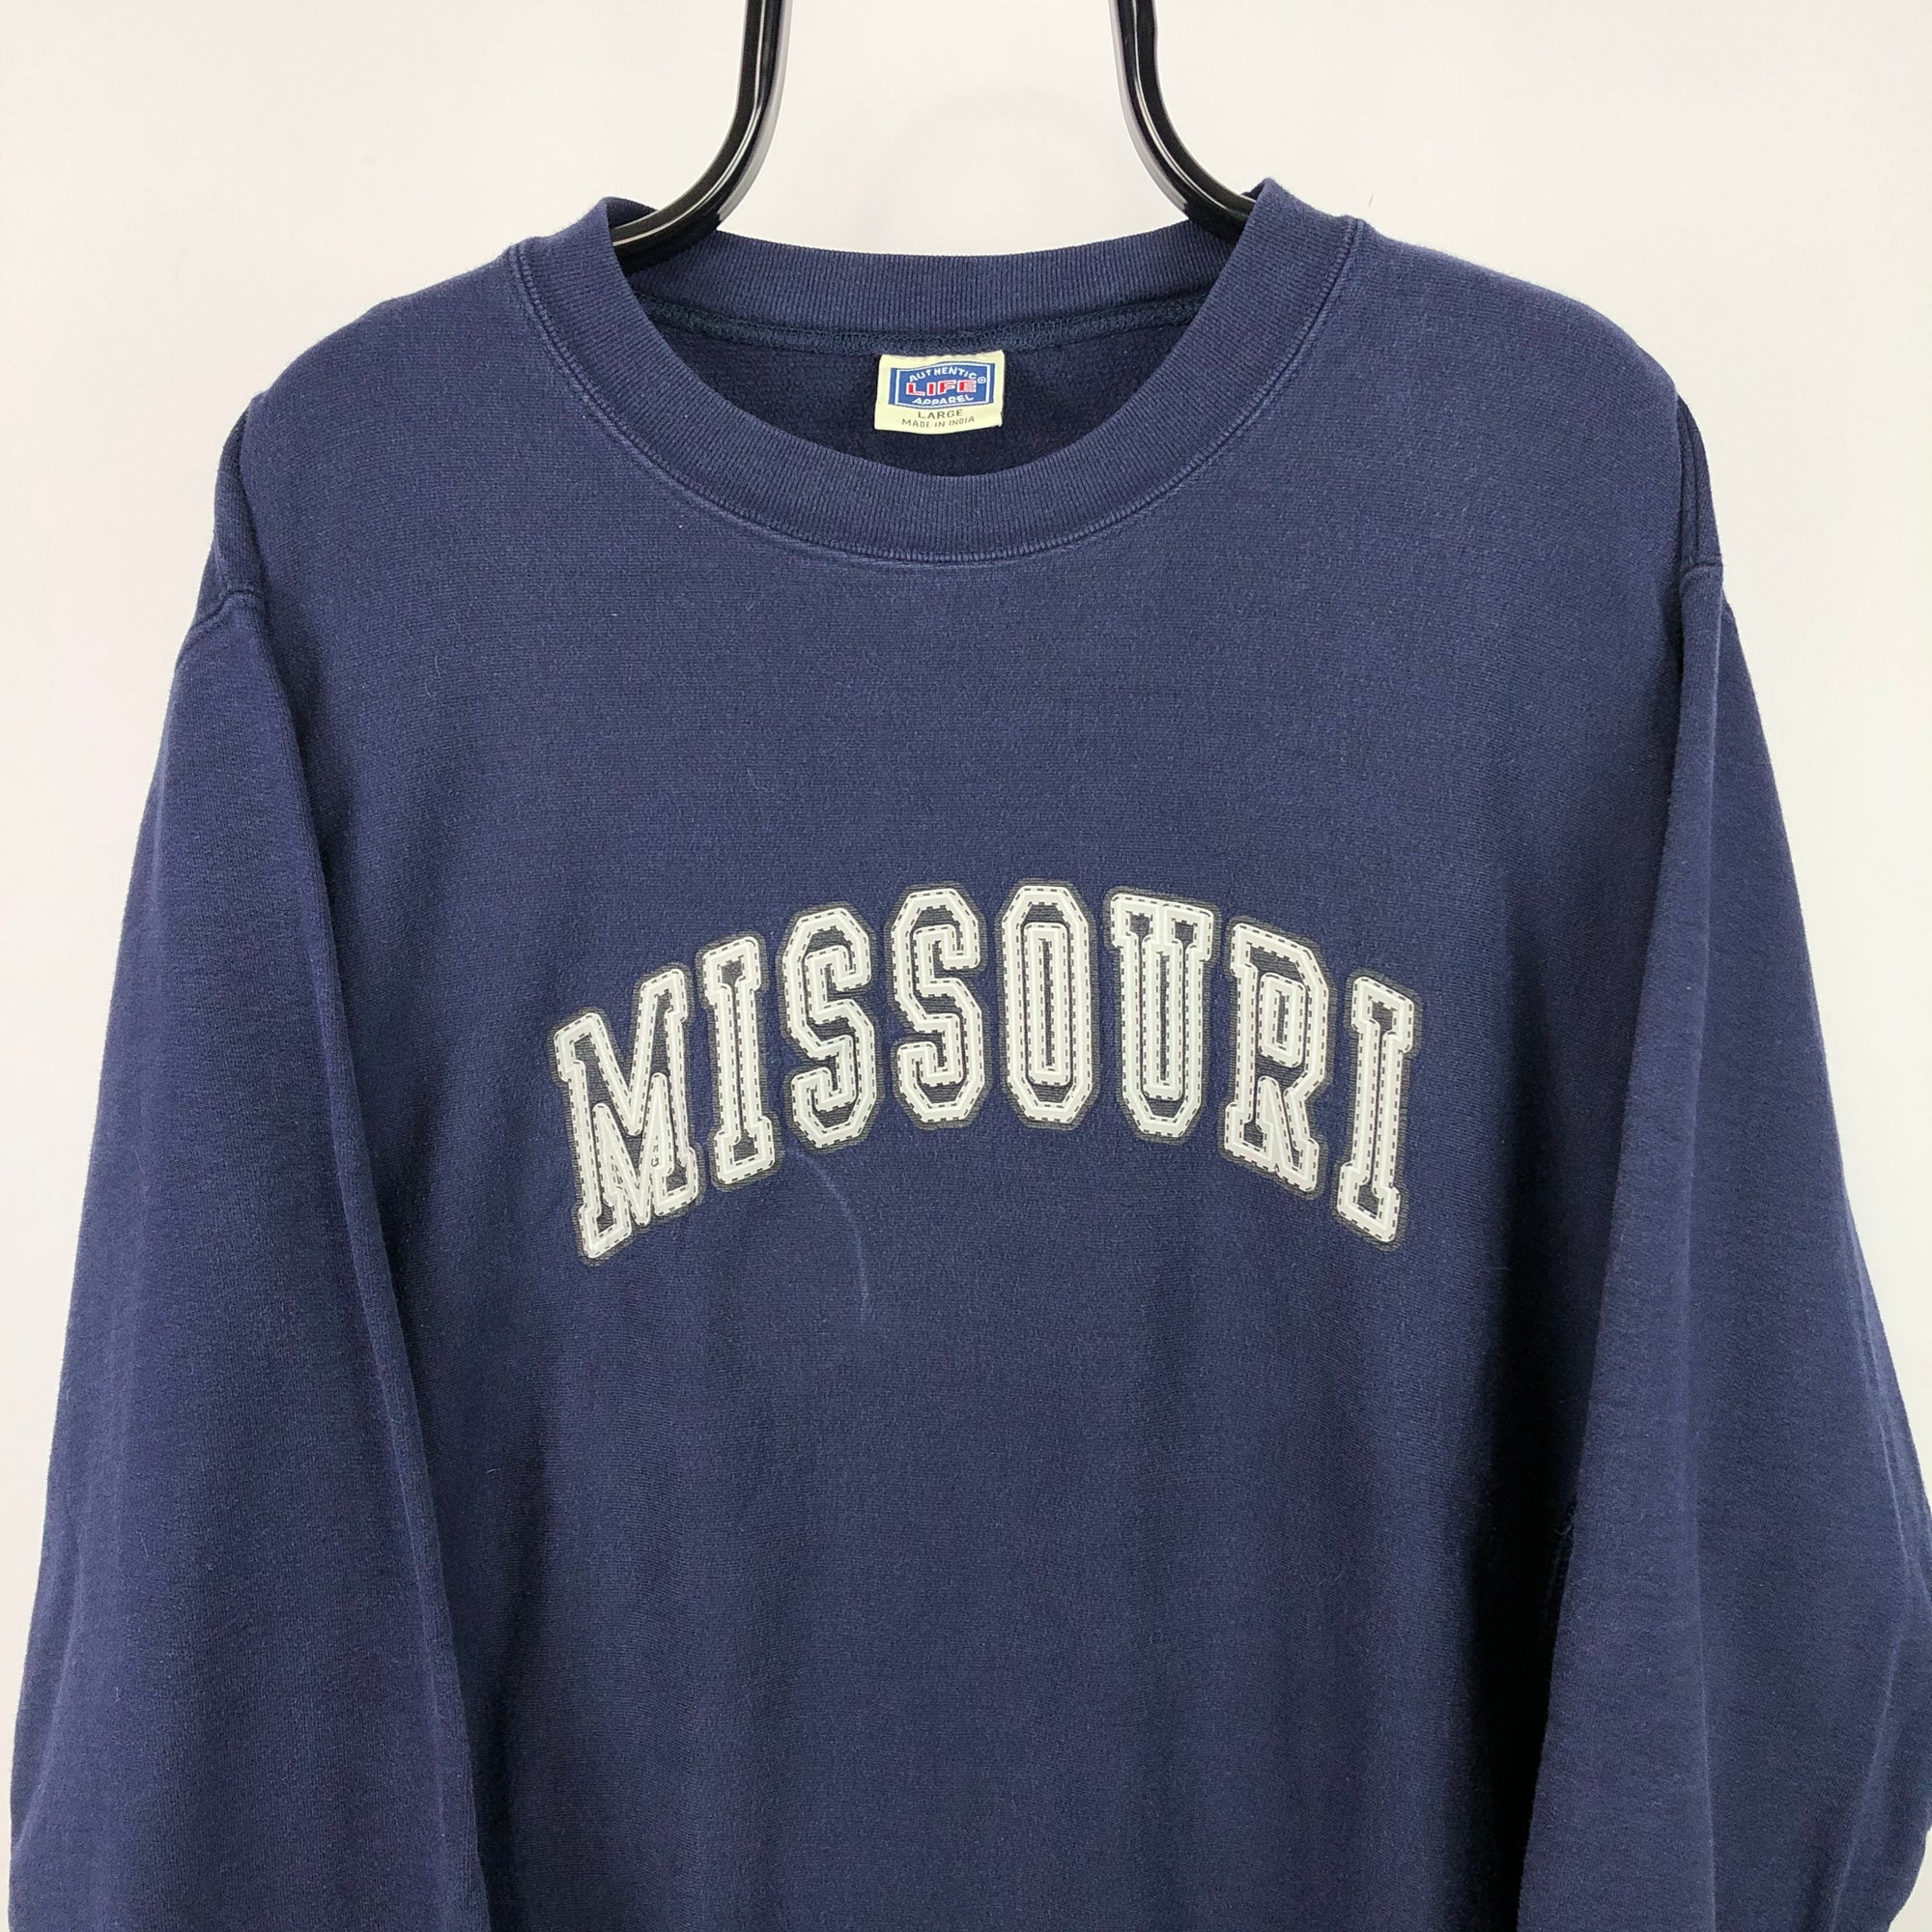 Vintage Missouri US College Sweatshirt in Navy - Men's Large/Women's XL